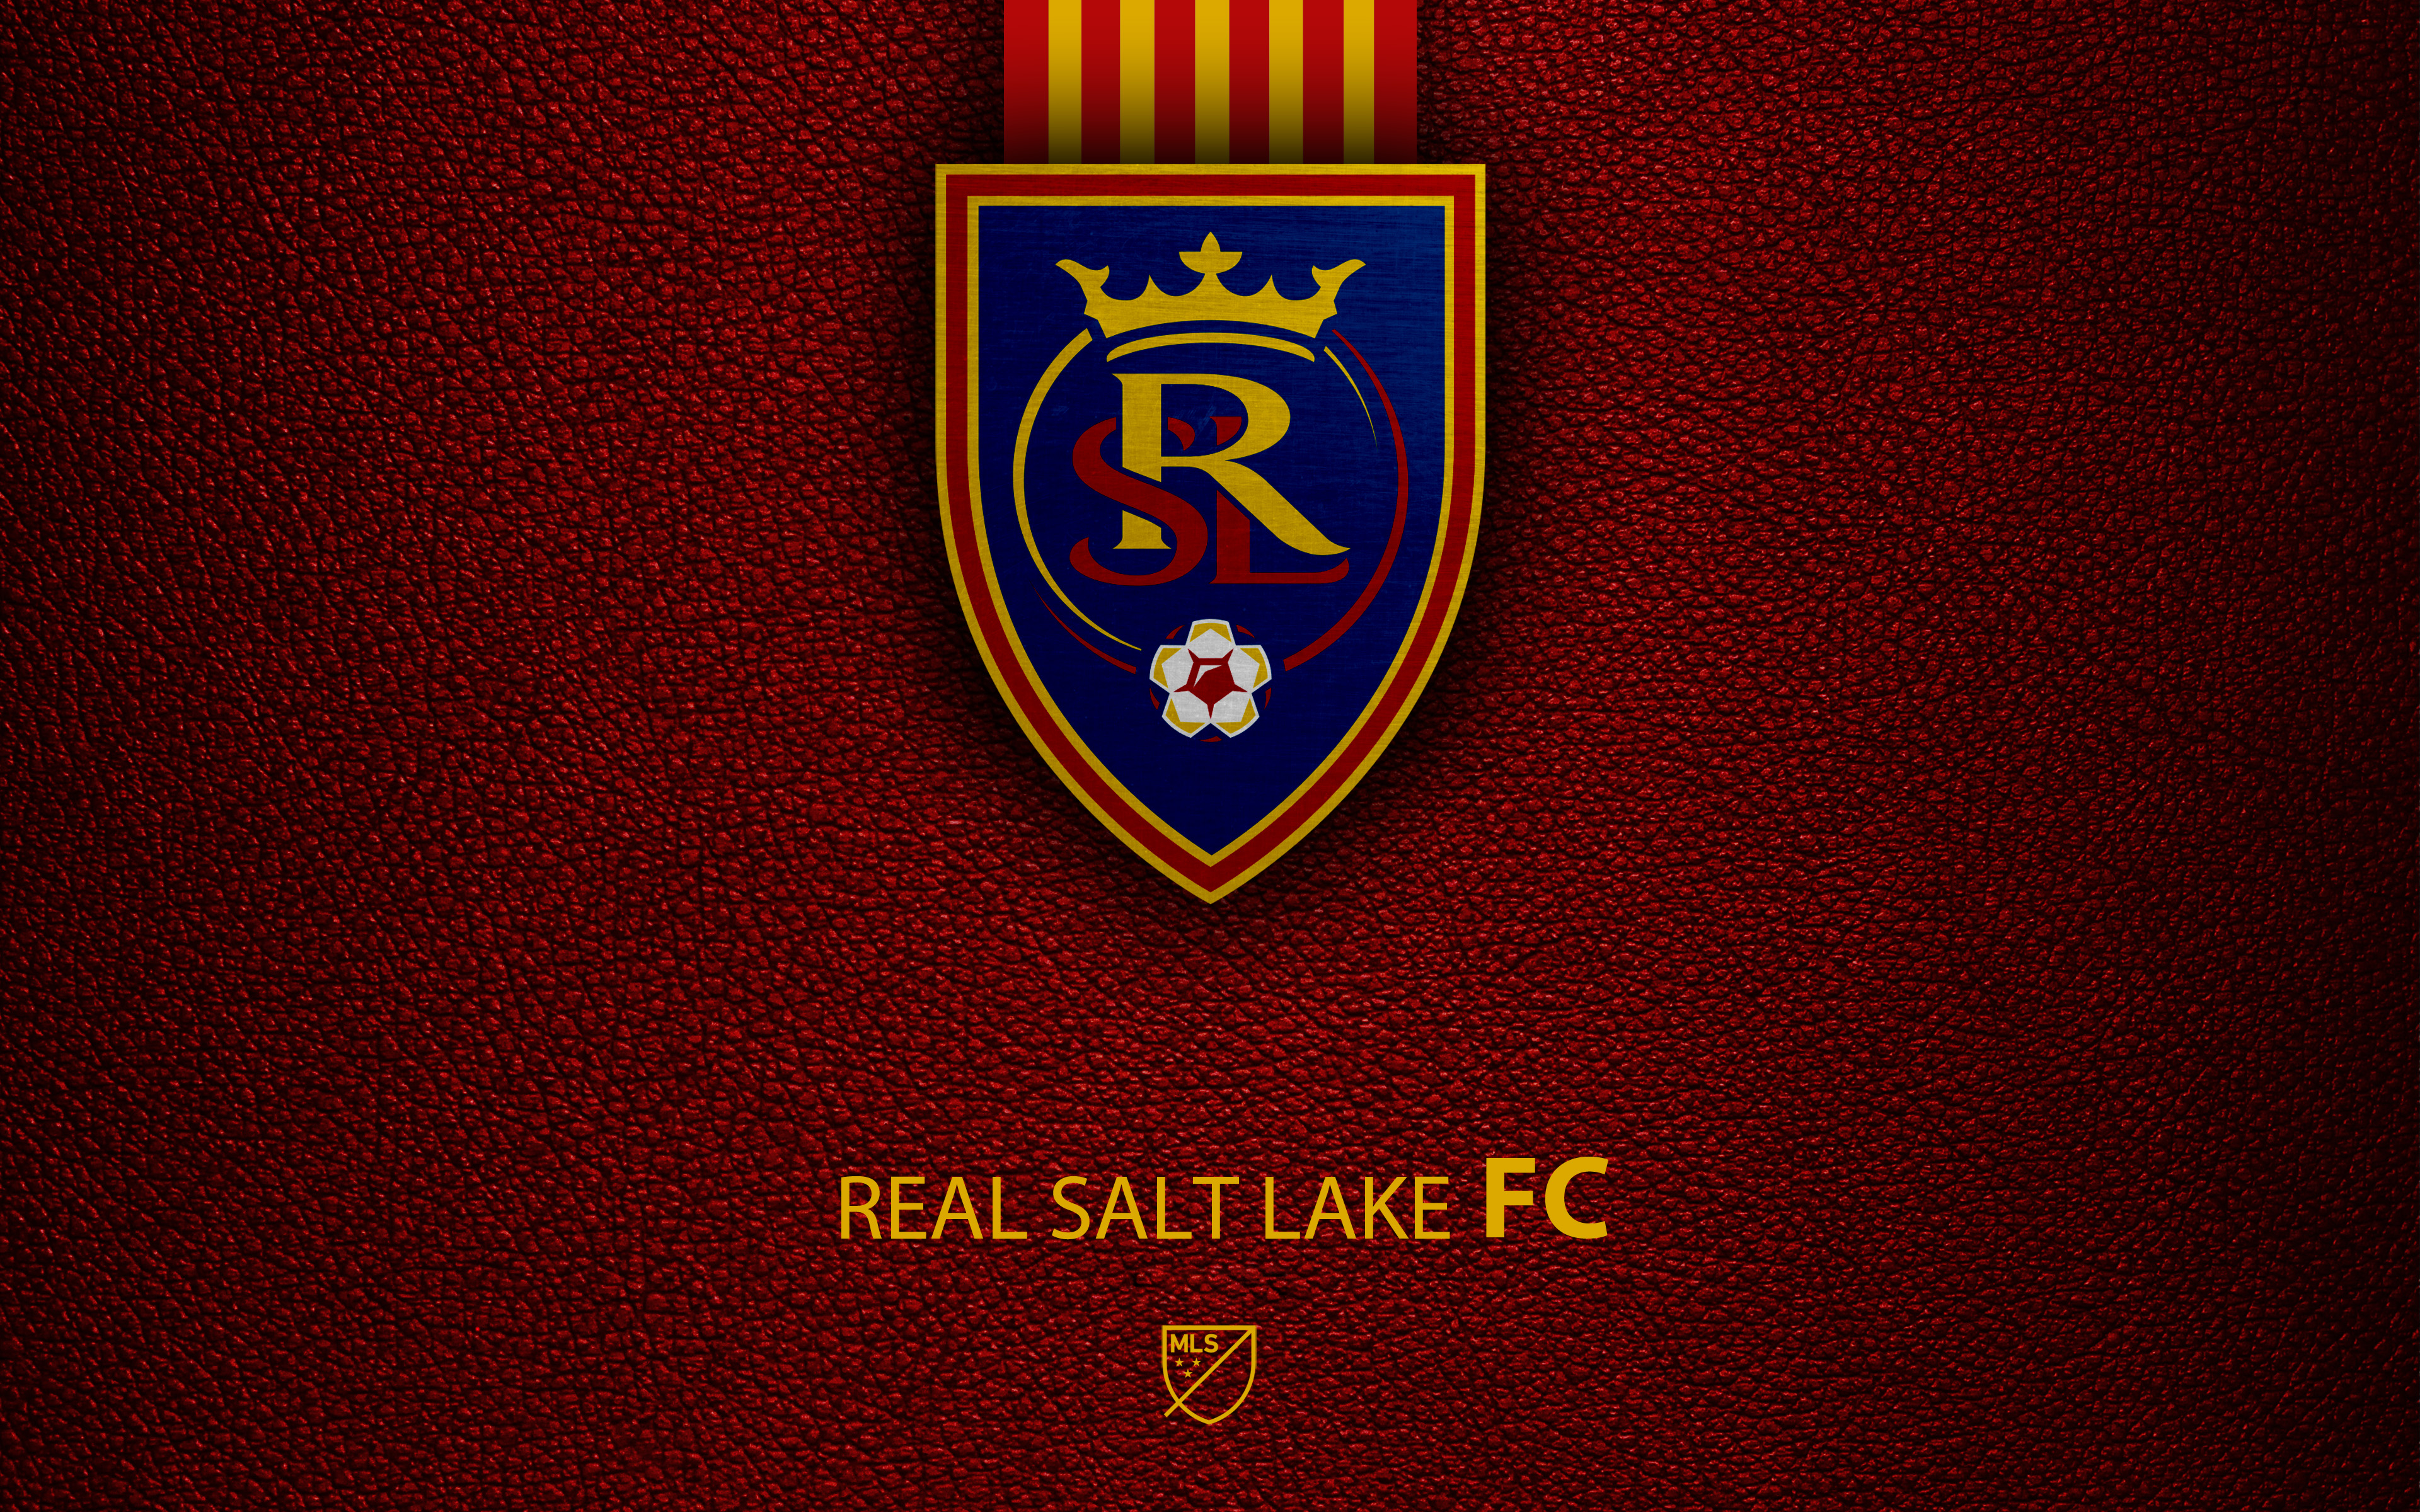 Real Salt Lake 4k Ultra HD Wallpaper Background Image